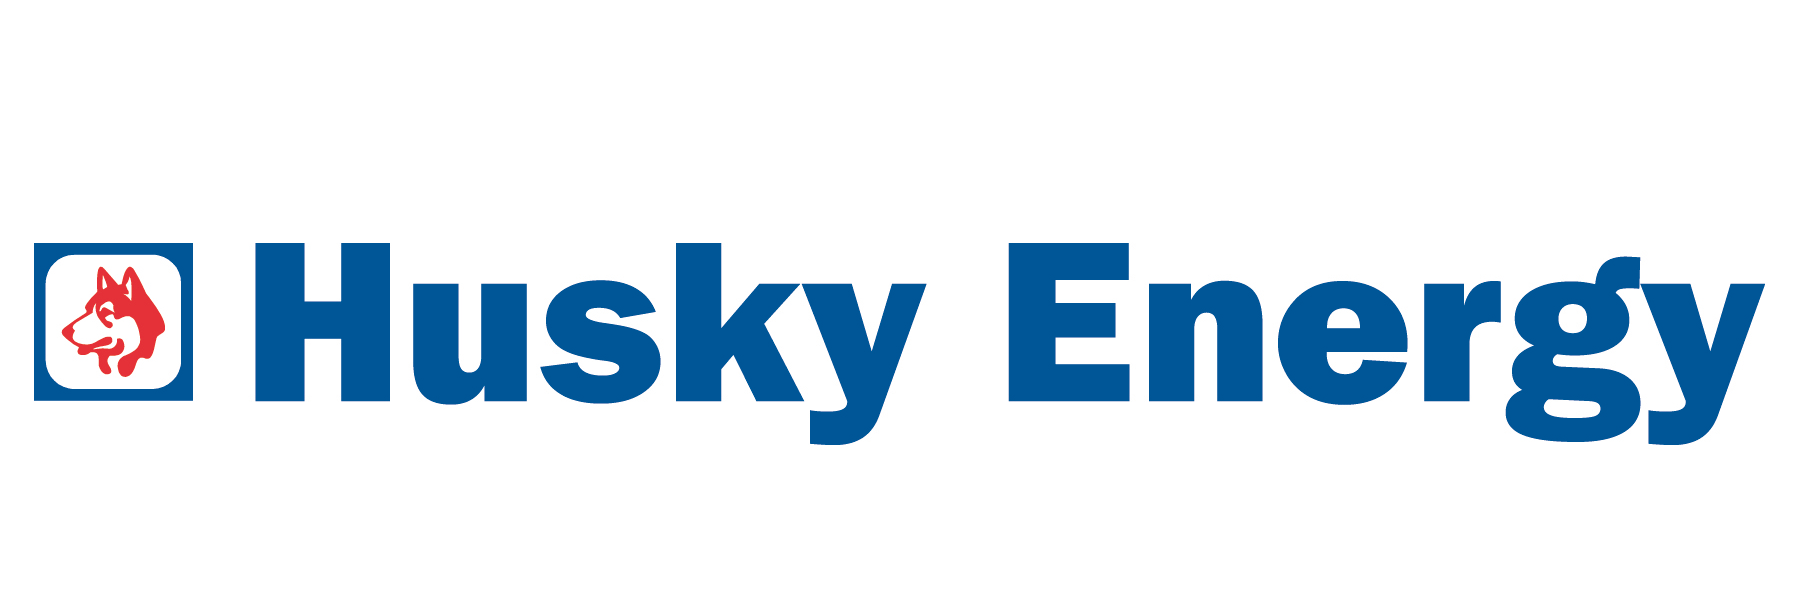 Husky Energy Logo Vector PNG - 105374